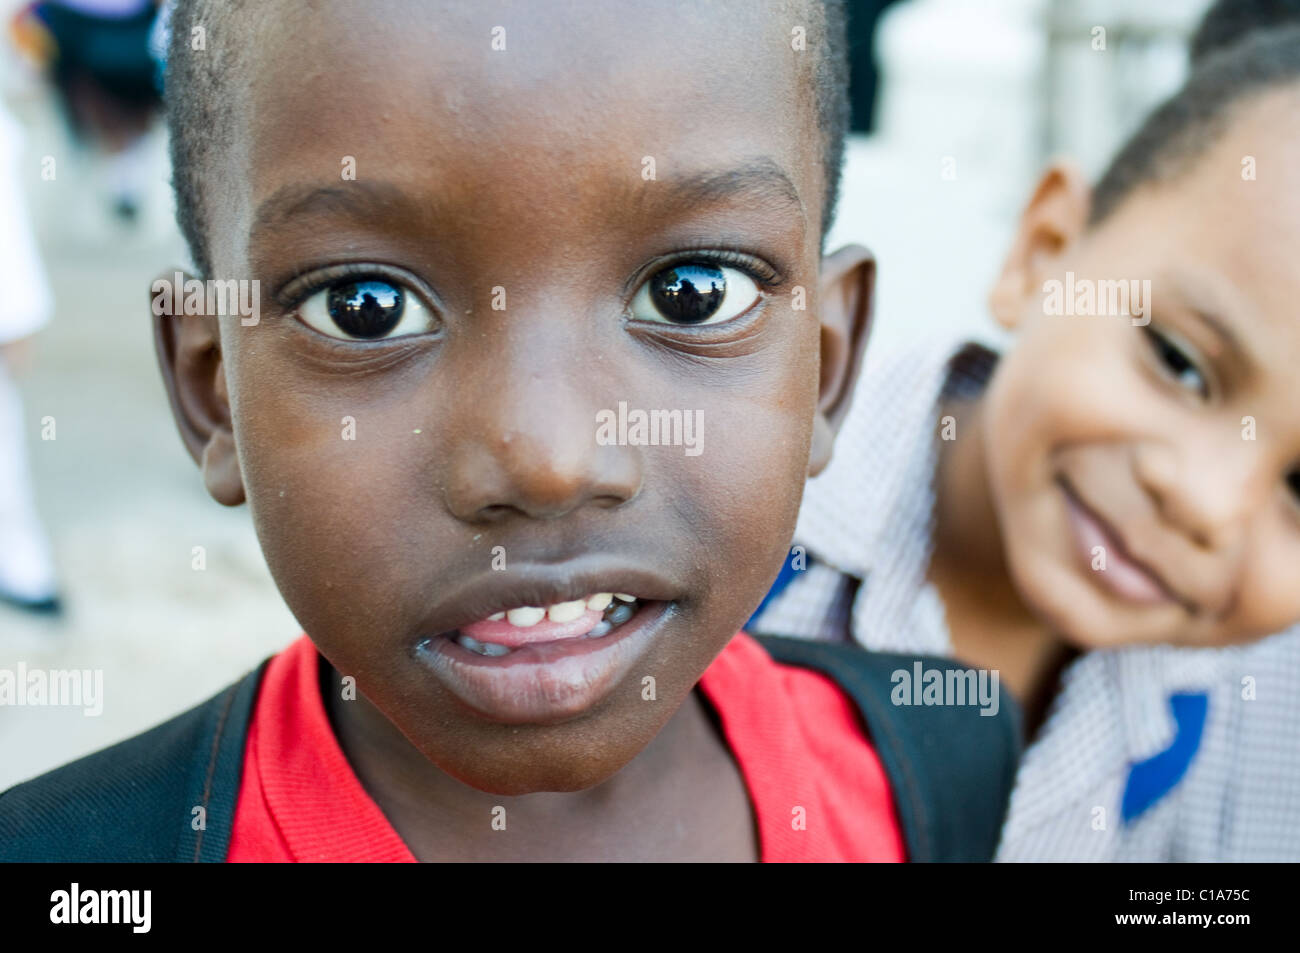 Children at primary school, Old Stone Town, Lamu, Kenya Stock Photo